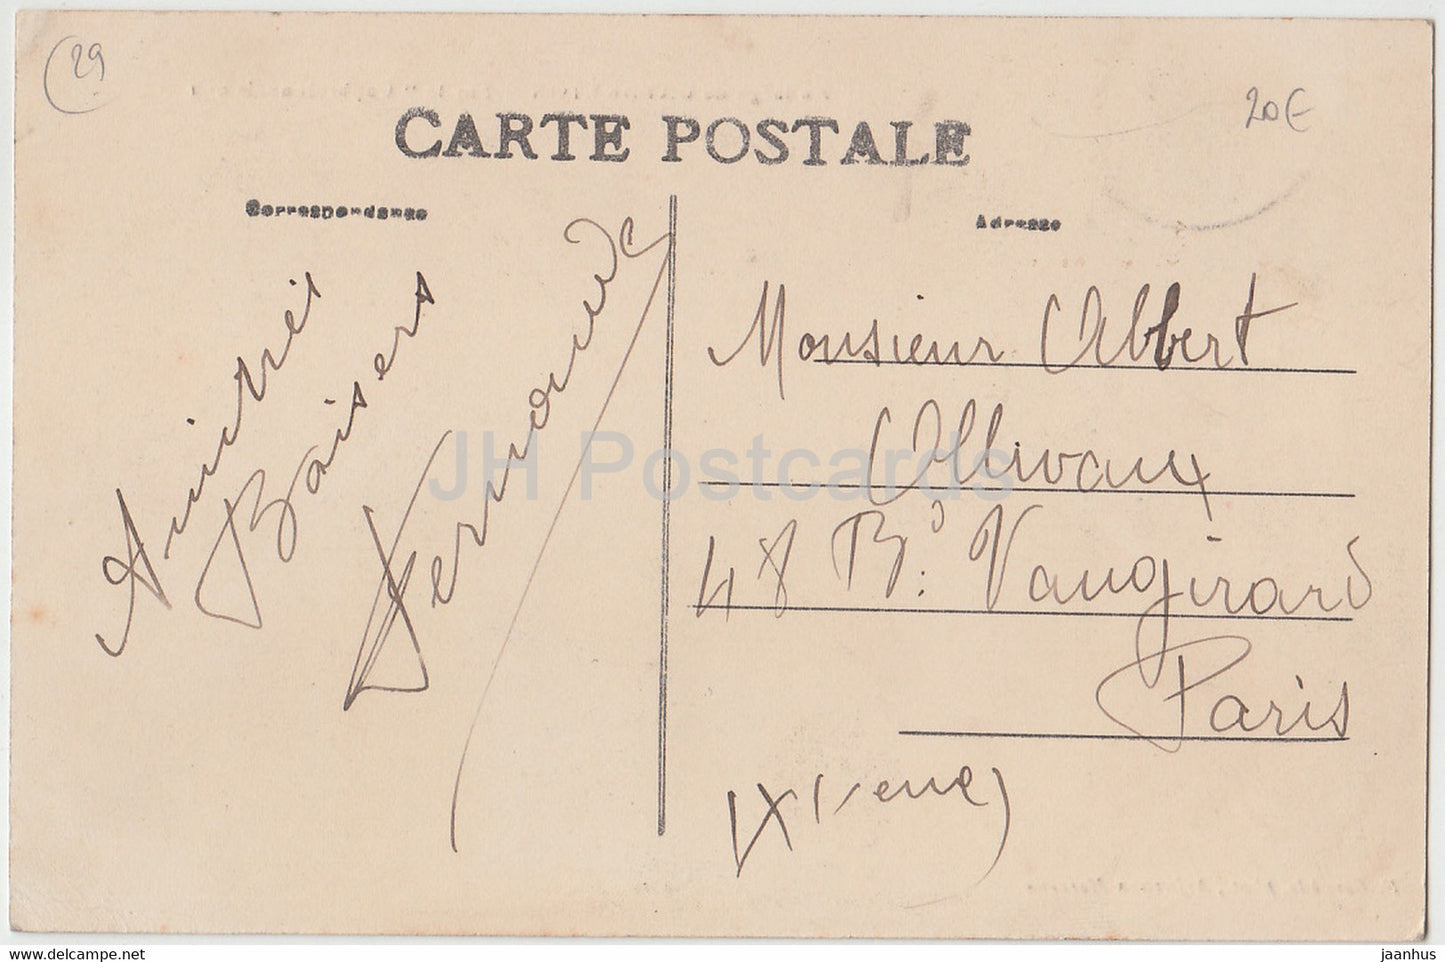 Au large de Capbreton - Sur le Capbretonnais - ship - old postcard - France - used